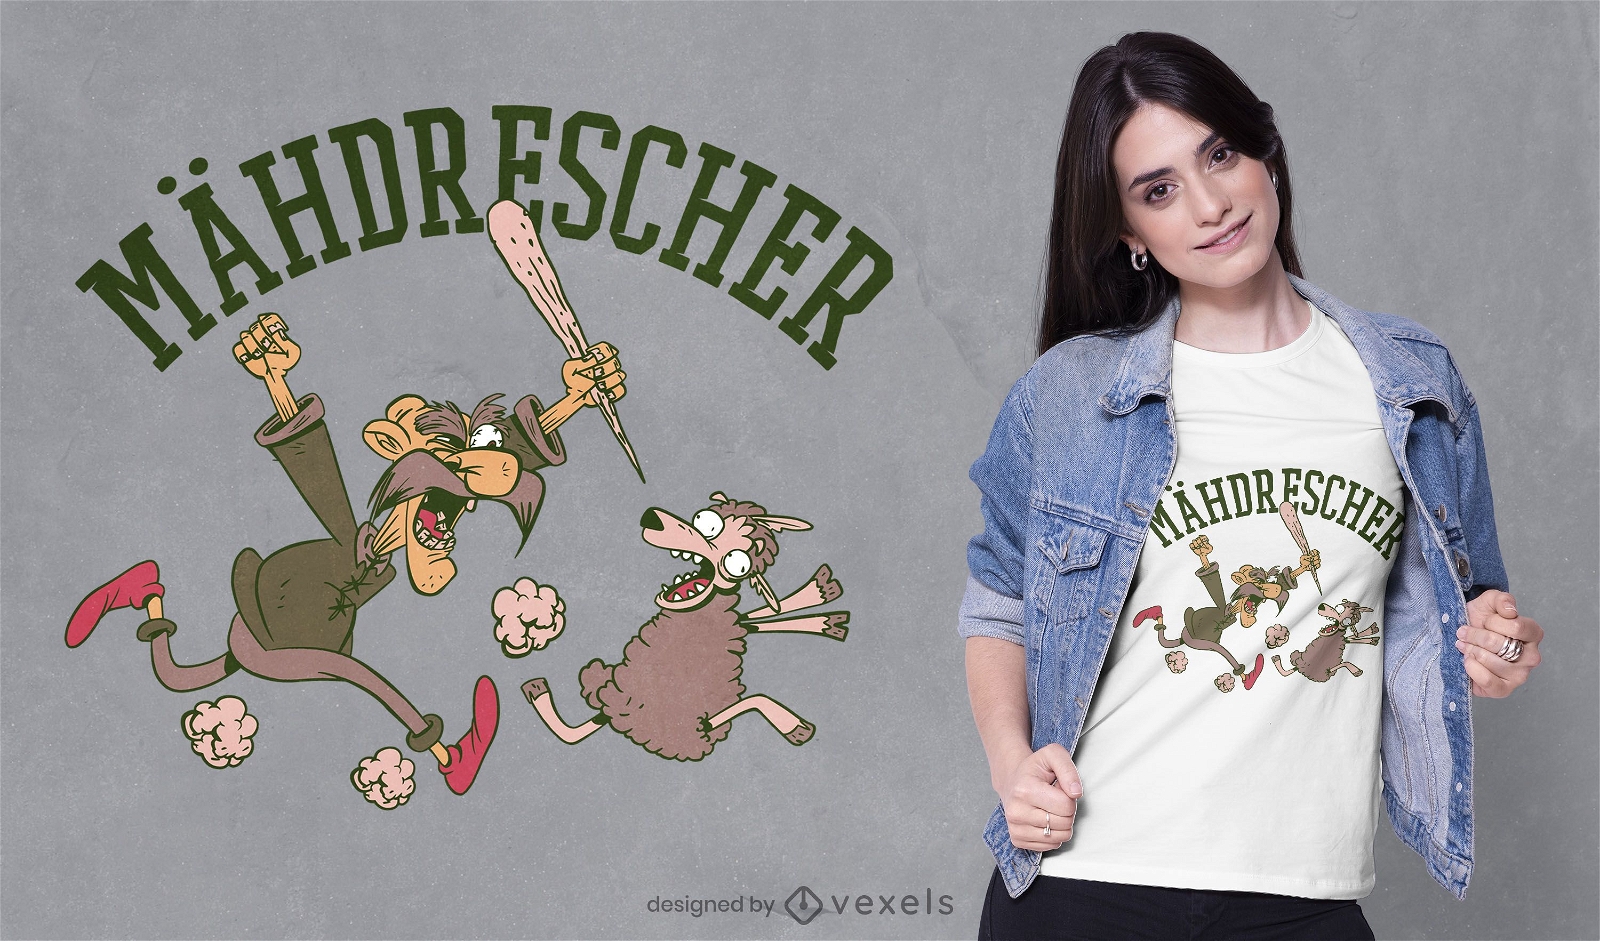 Farmer chasing sheep t-shirt design